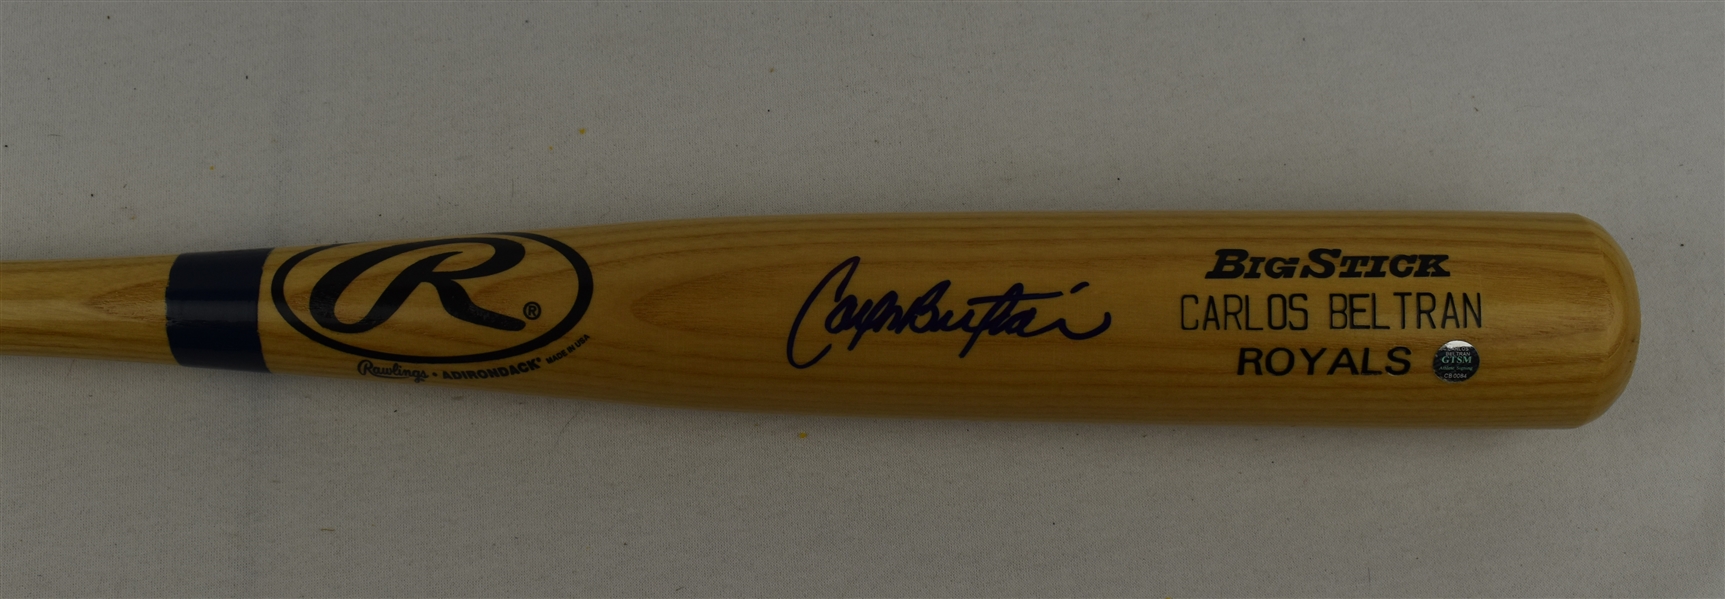 Carlos Beltran Autographed Bat